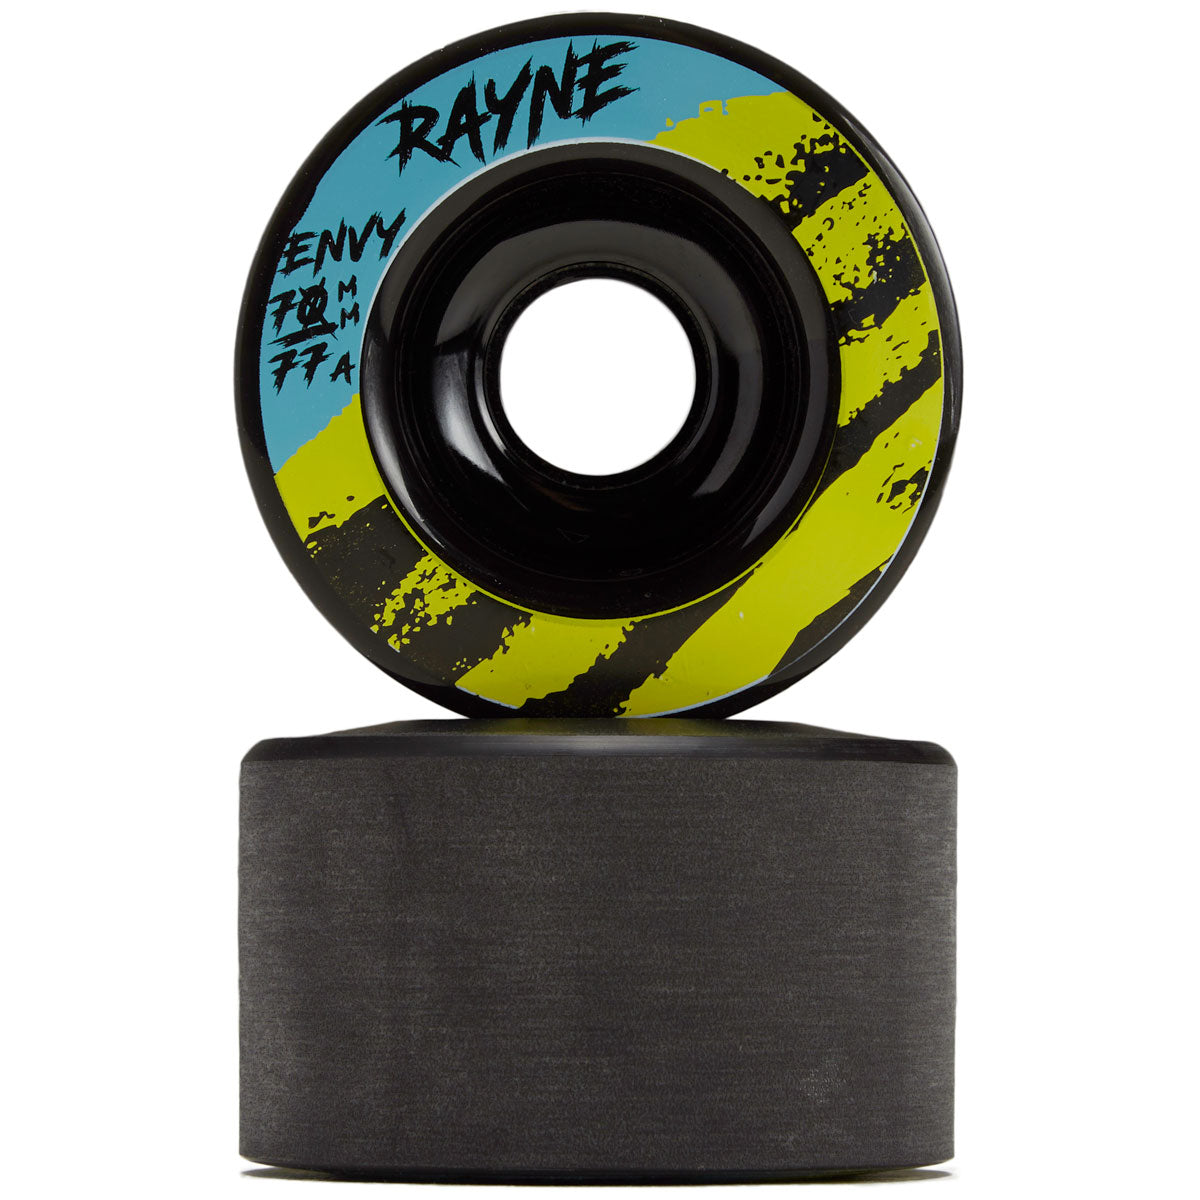 Rayne Envy V2 77a Longboard Wheels - Black - 70mm image 2